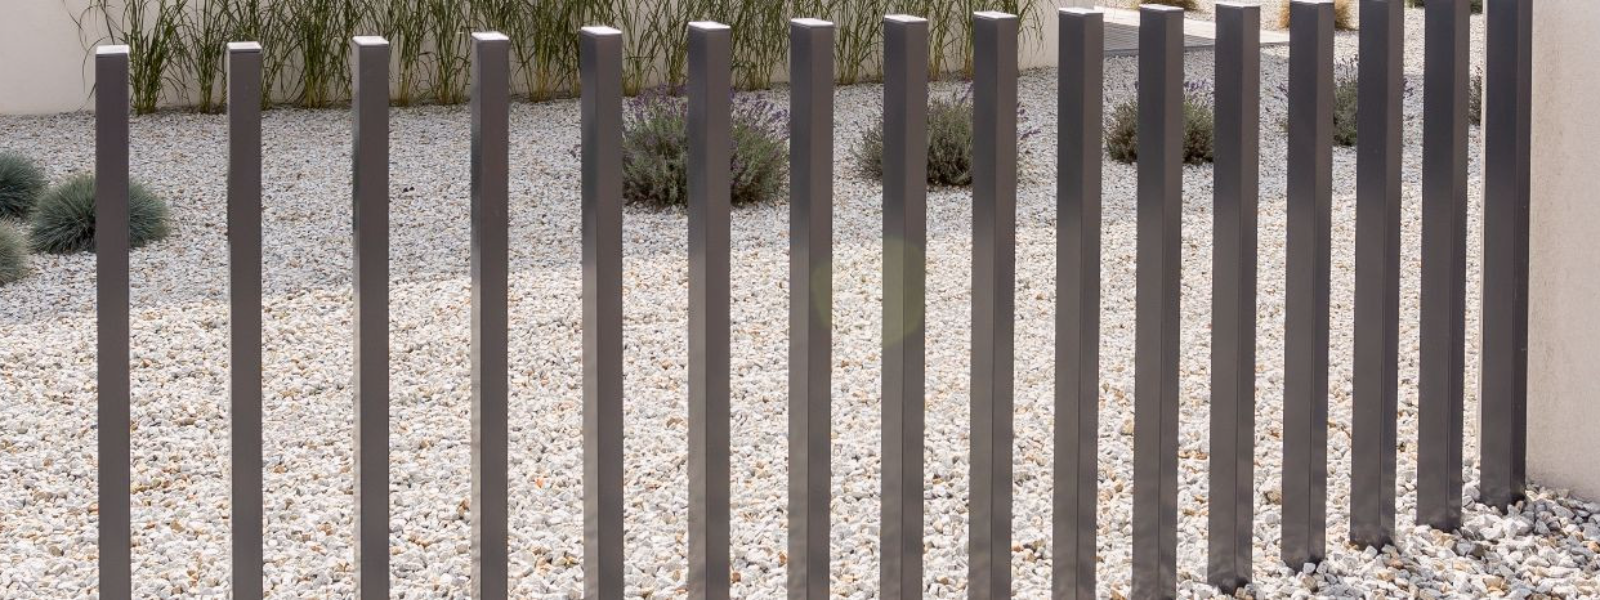 AIAPROFID OÜ - panel fences, automatic garden gates, garden security solutions, smart lighting in the garden, motion sens...